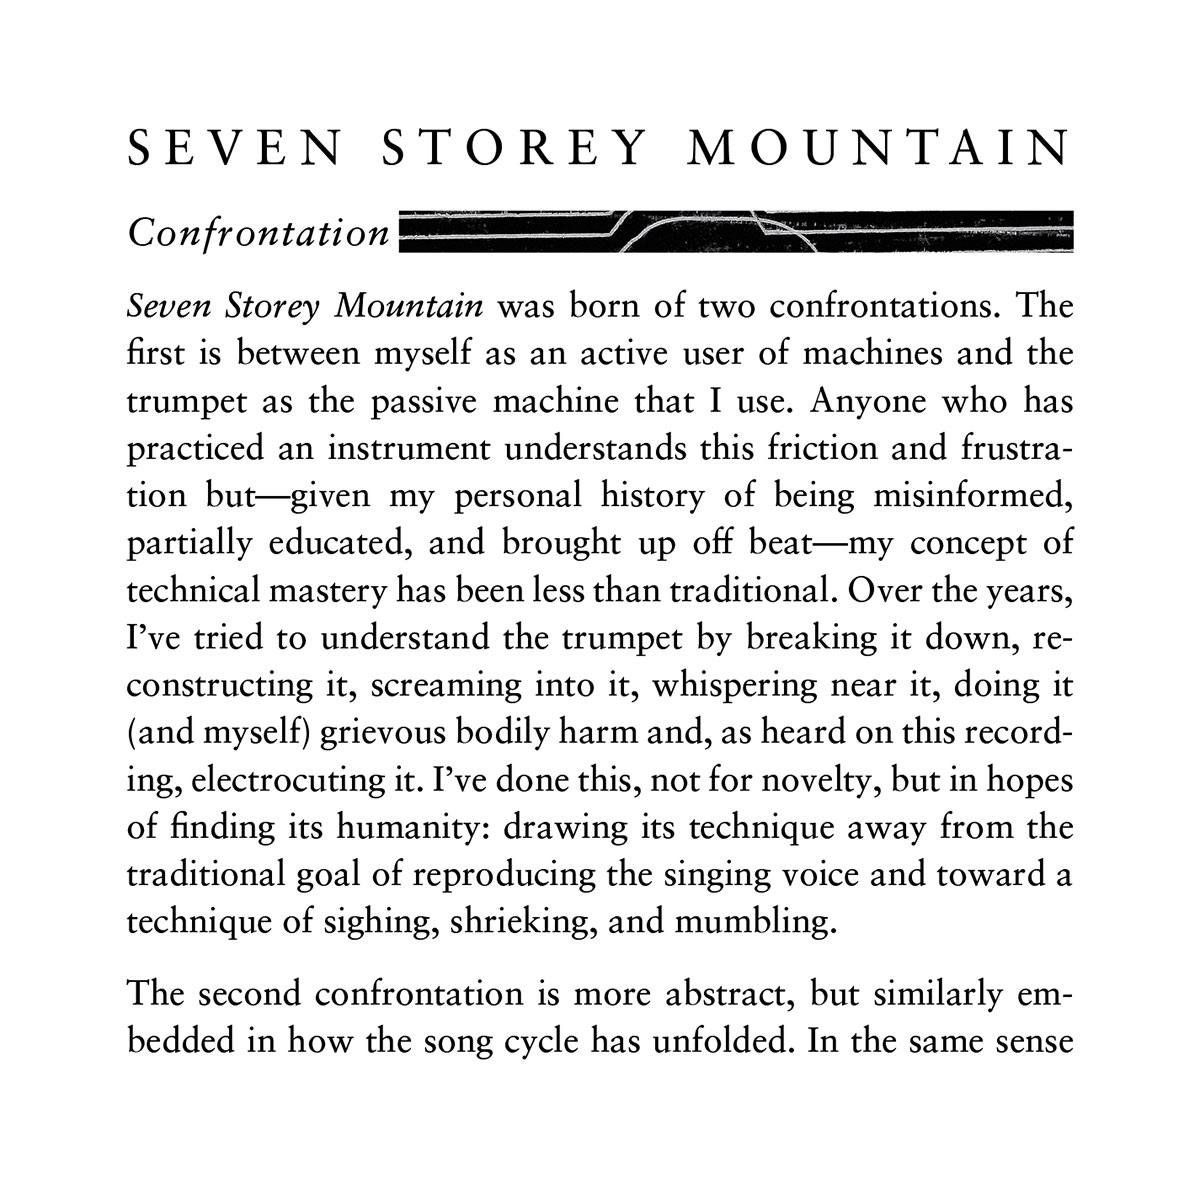 SEVEN STOREY MOUNTAIN VI